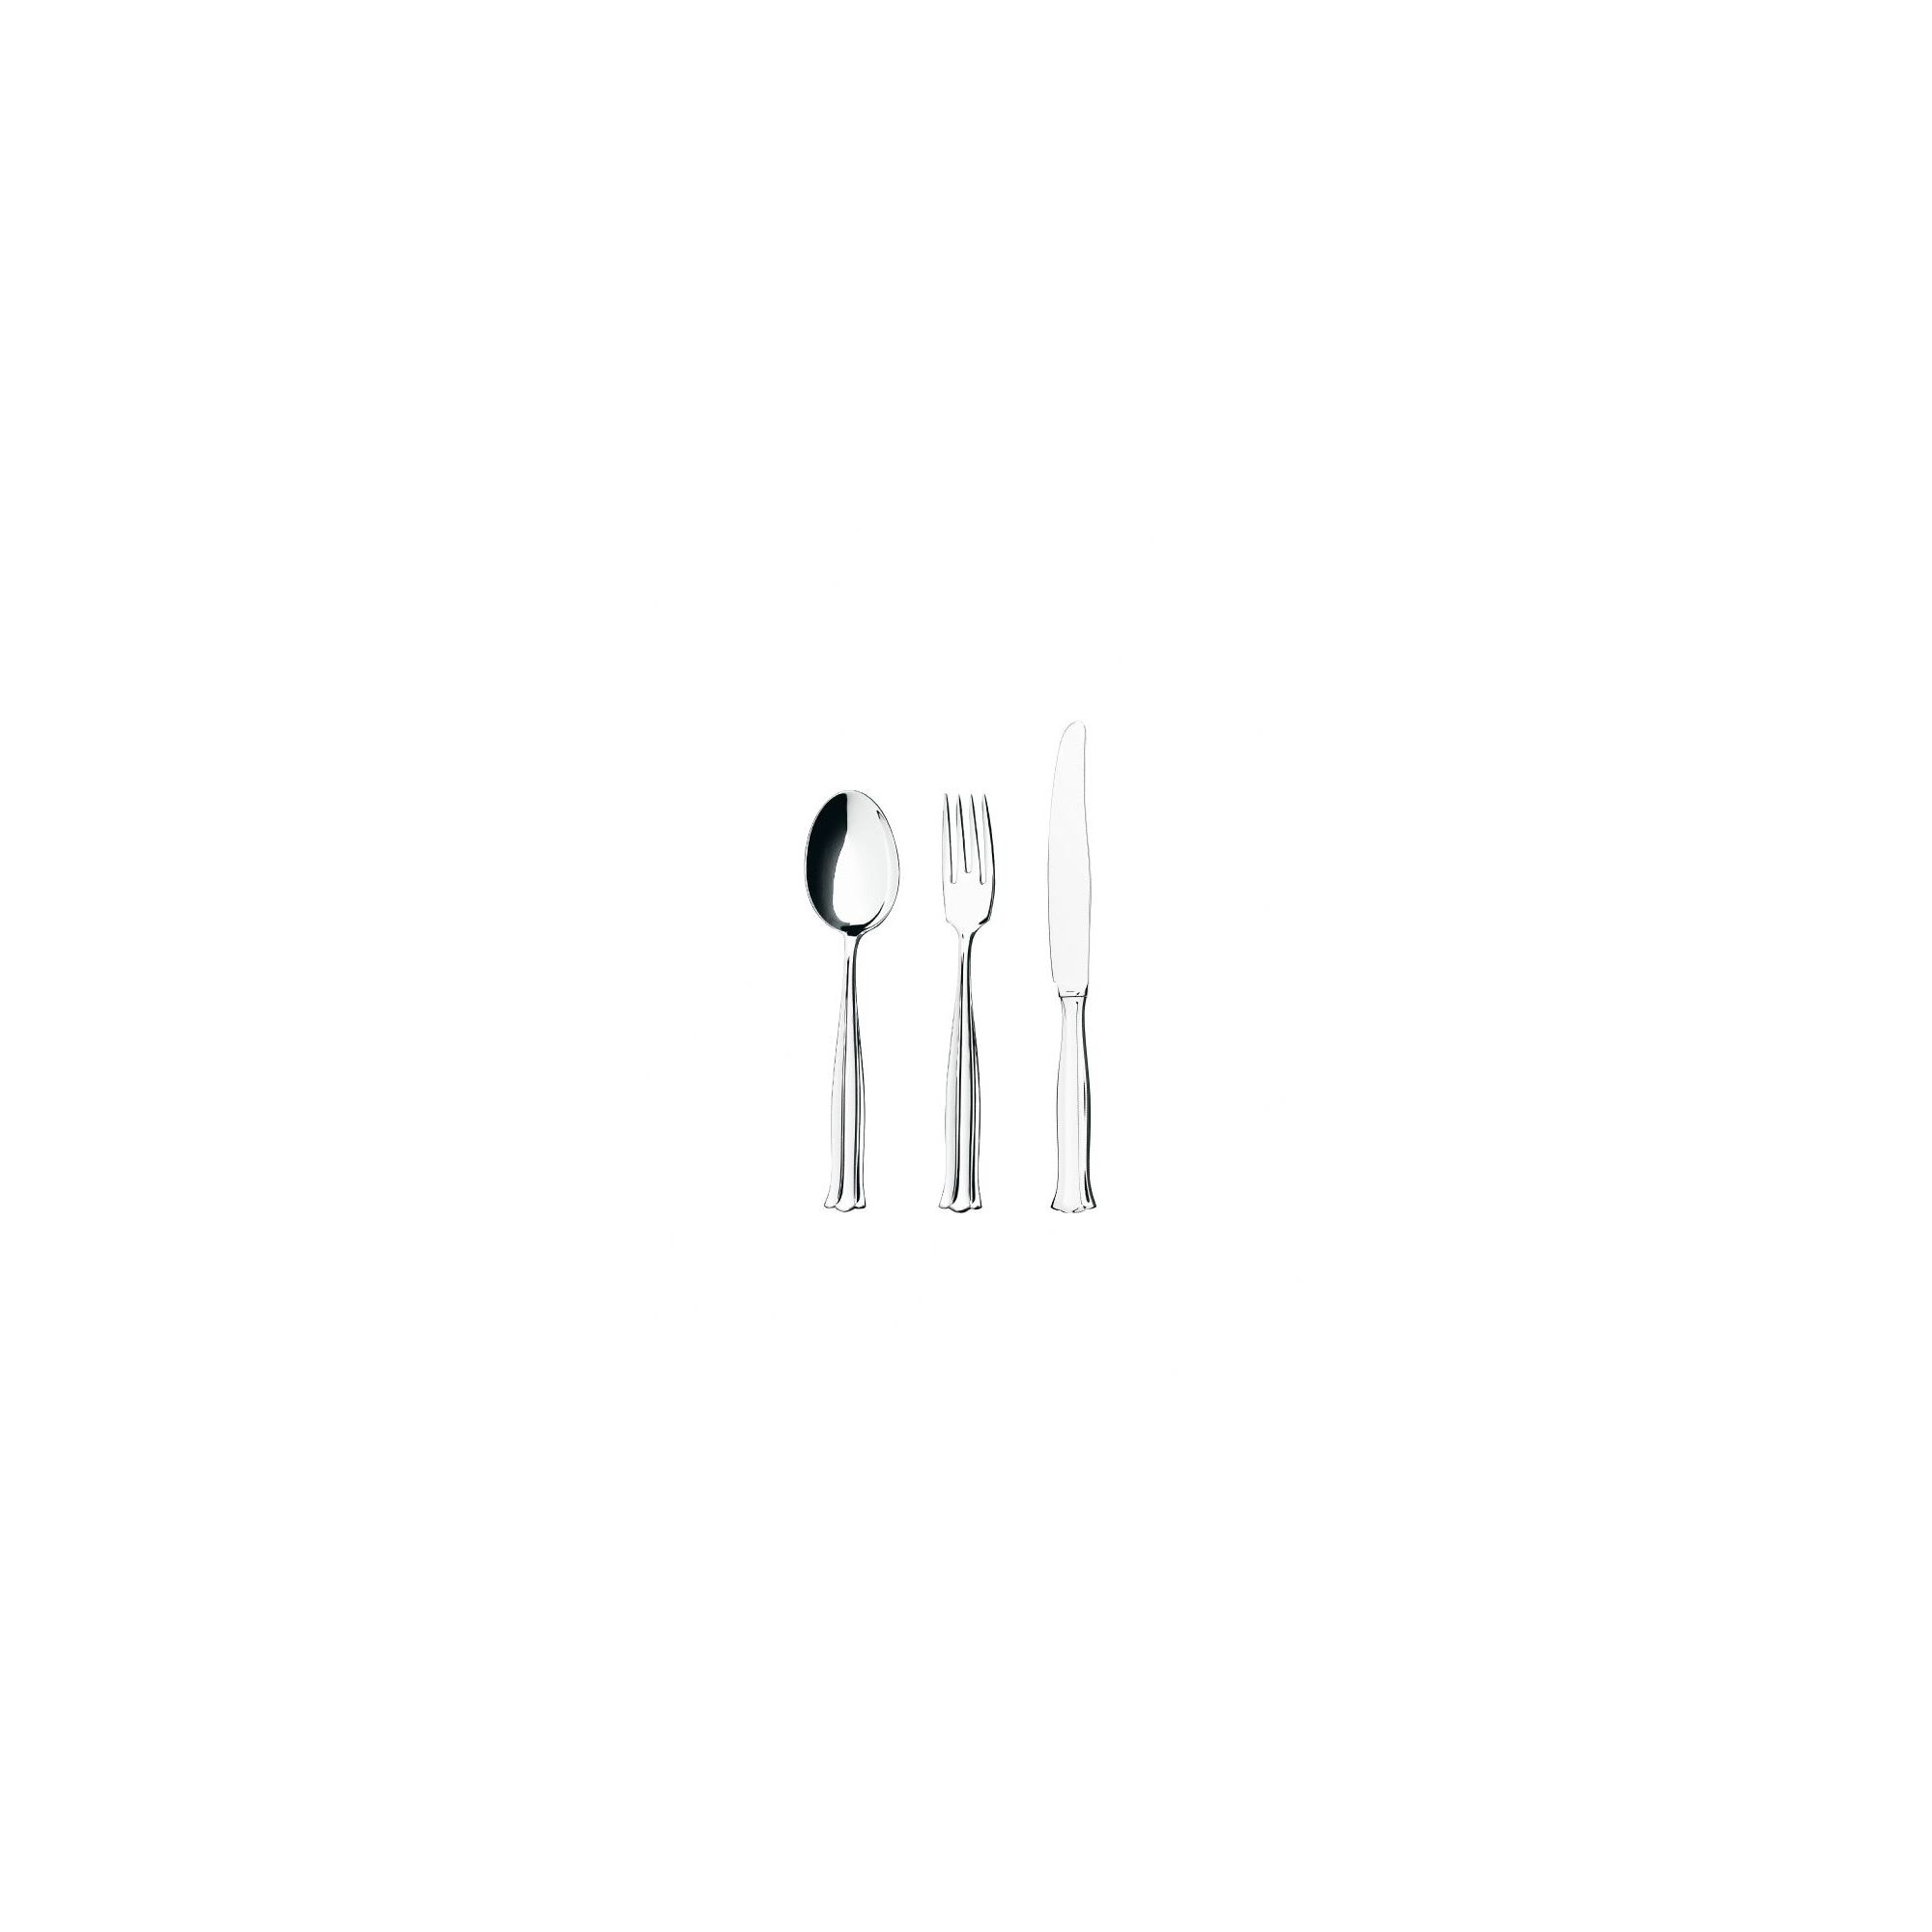 Mema/GAB Birgitta 12 Piece Silver Plated Cutlery Set 2 at Tesco Direct